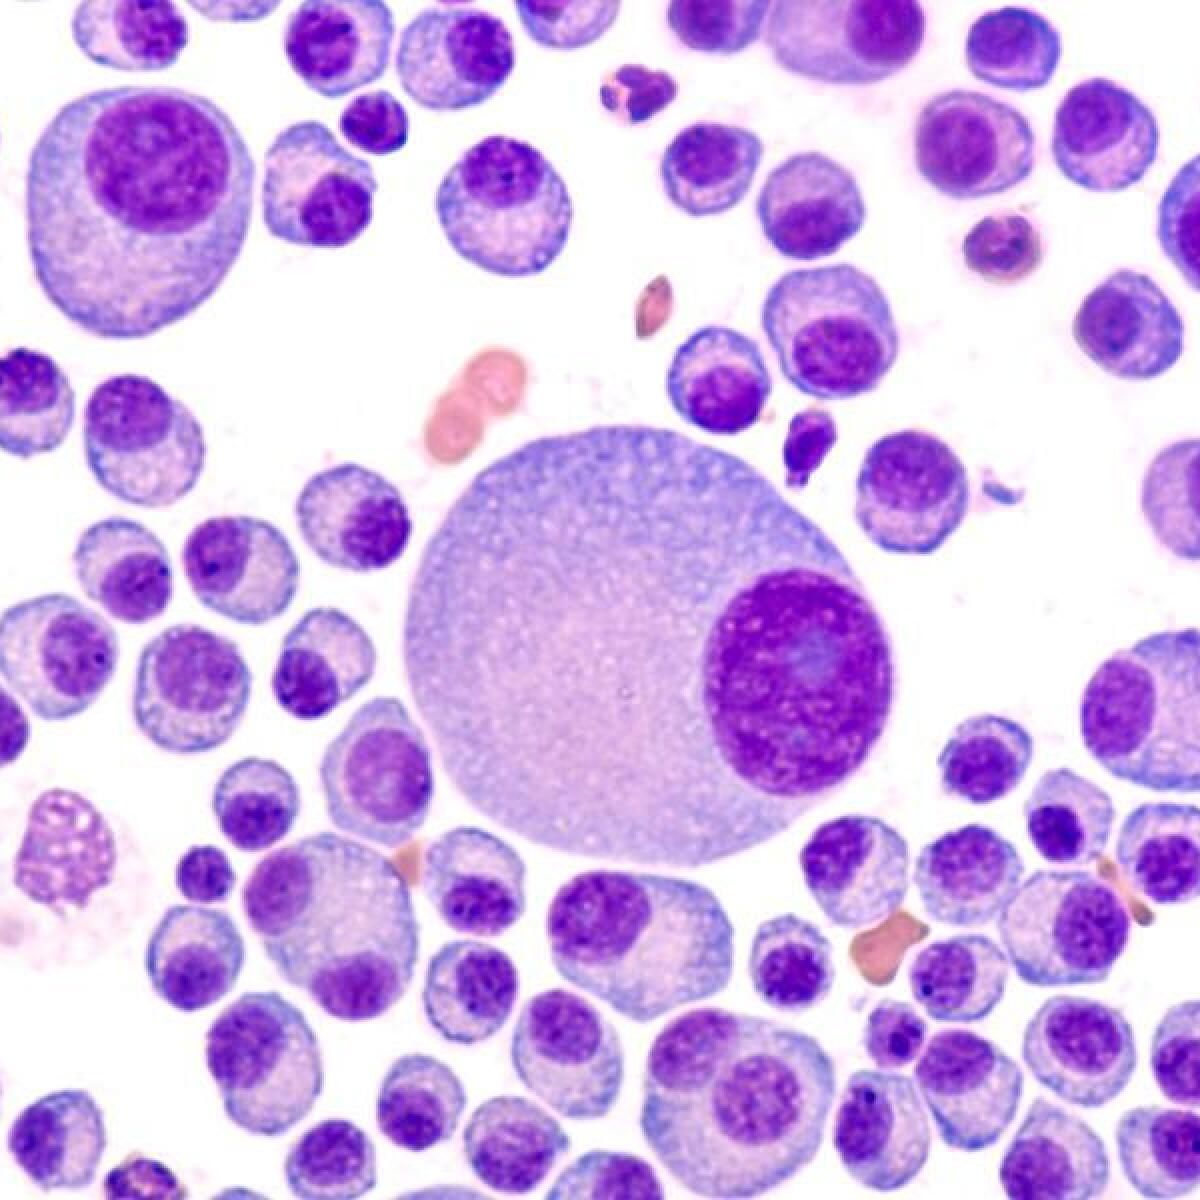 Myeloma cells.